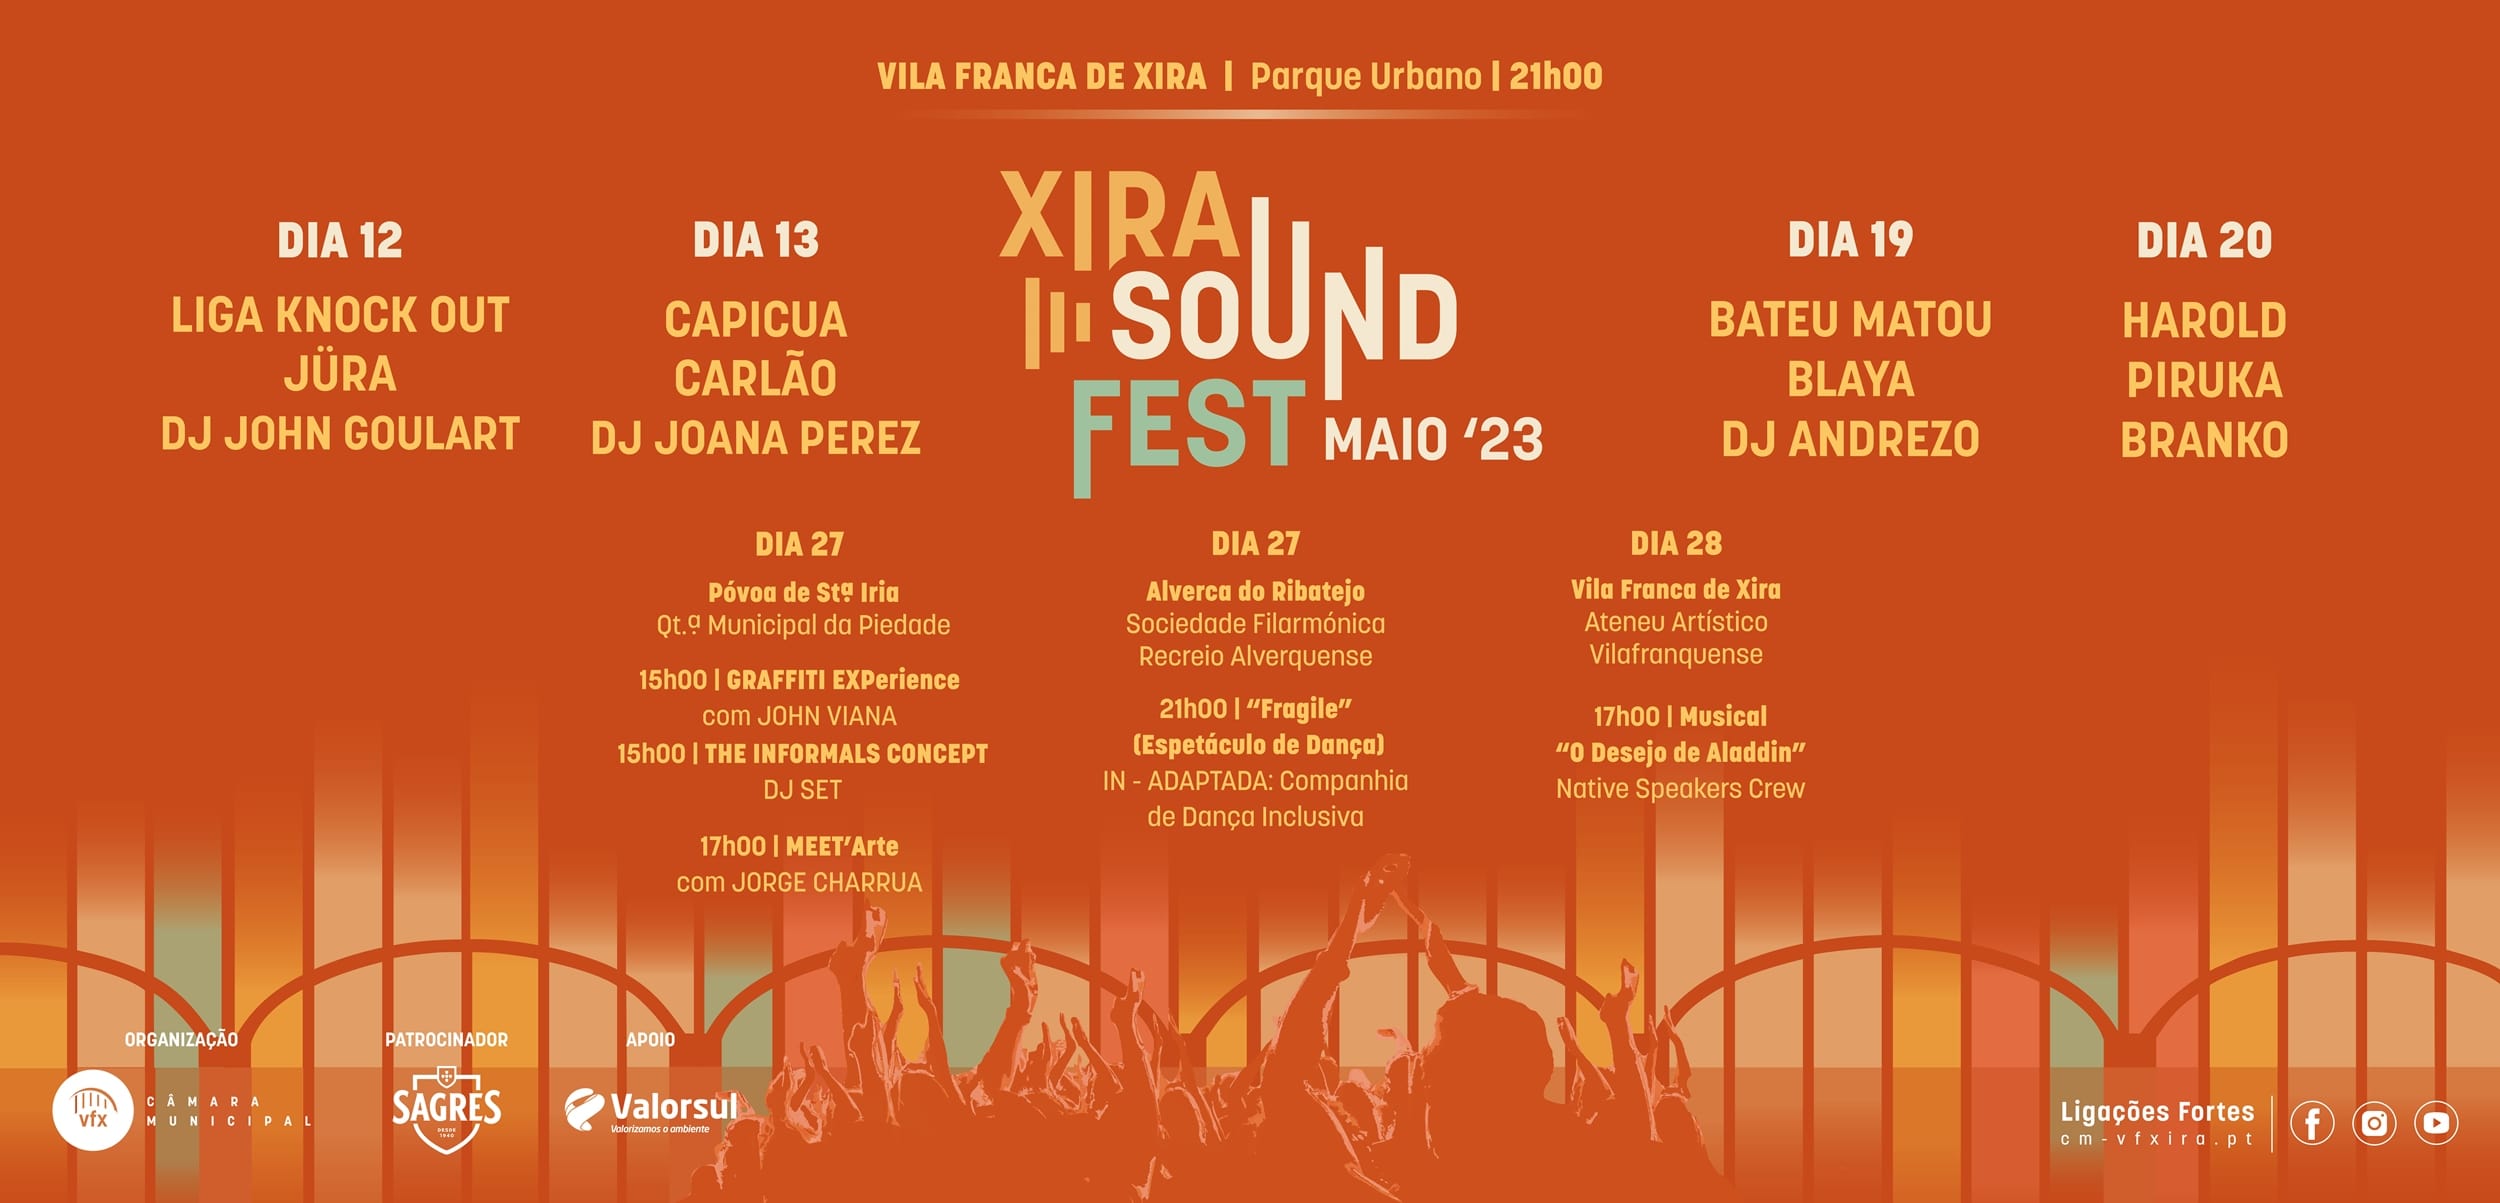 Xira Sound Fest: a música regressa em força a Vila Franca de Xira!